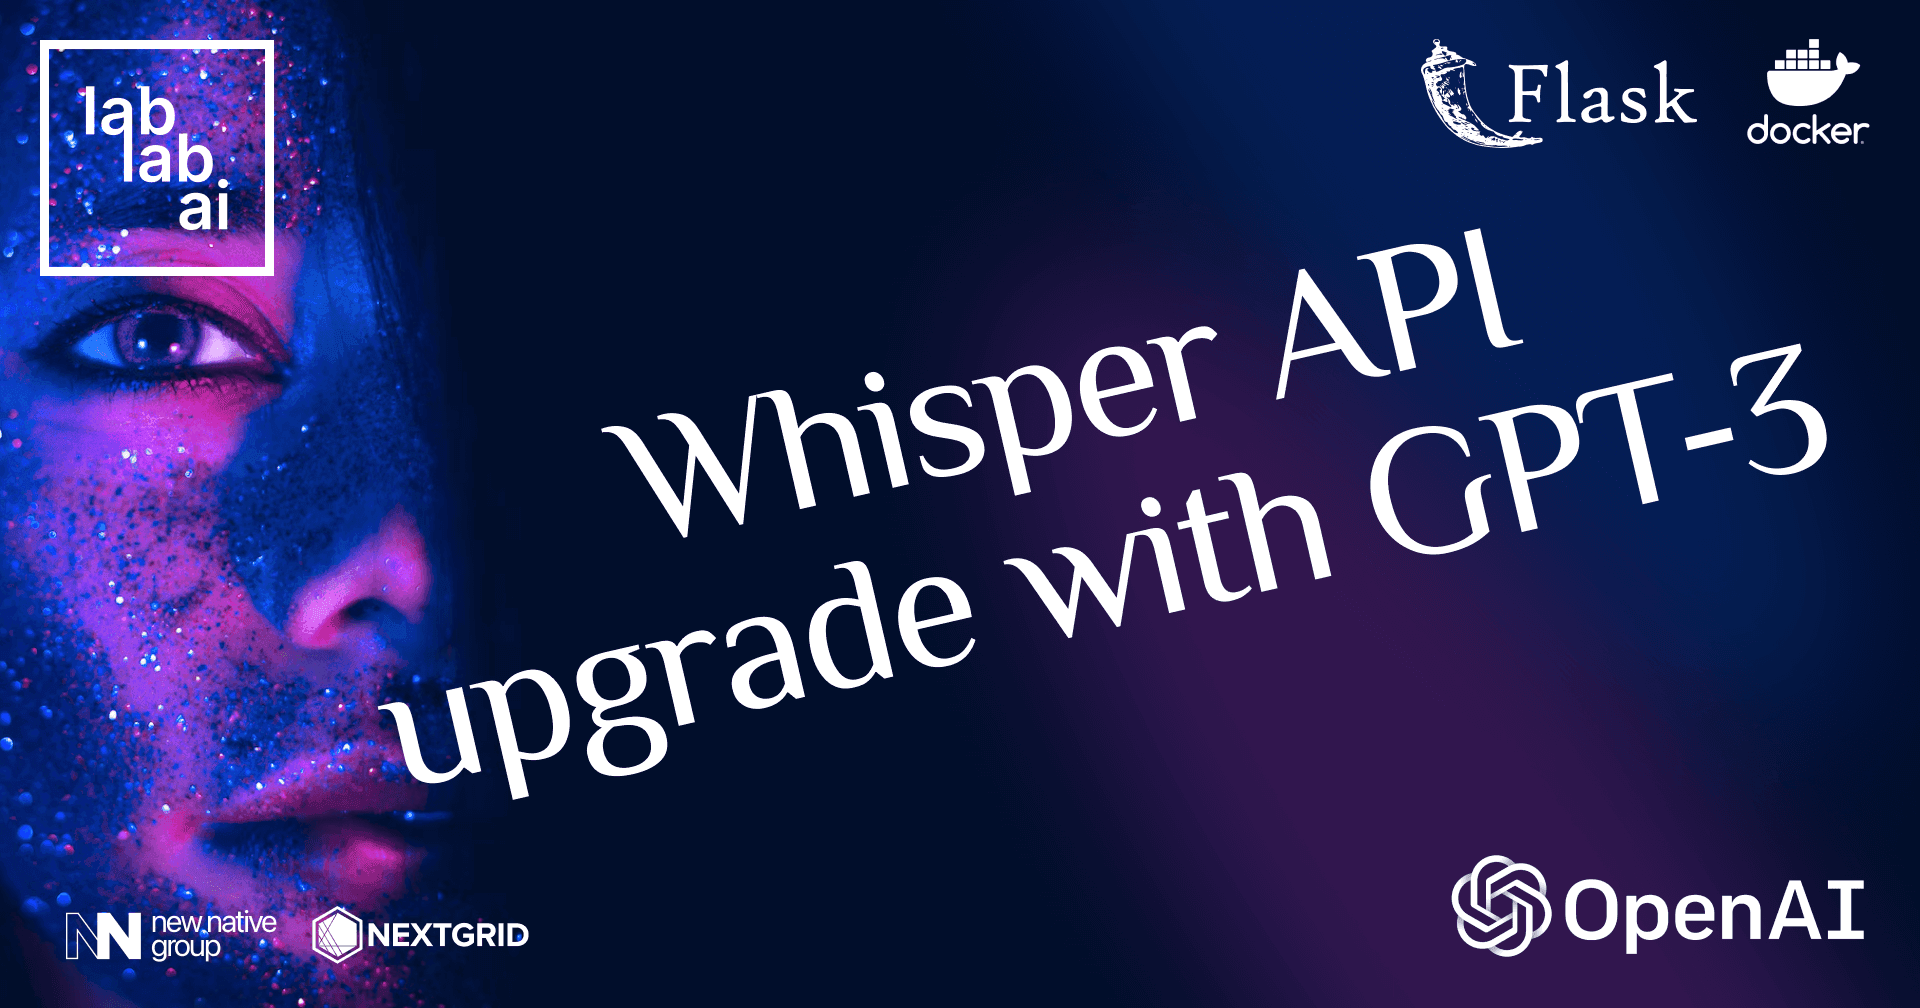 OpenAI Whisper tutorial: Updating our Whisper API with GPT-3 tutorial